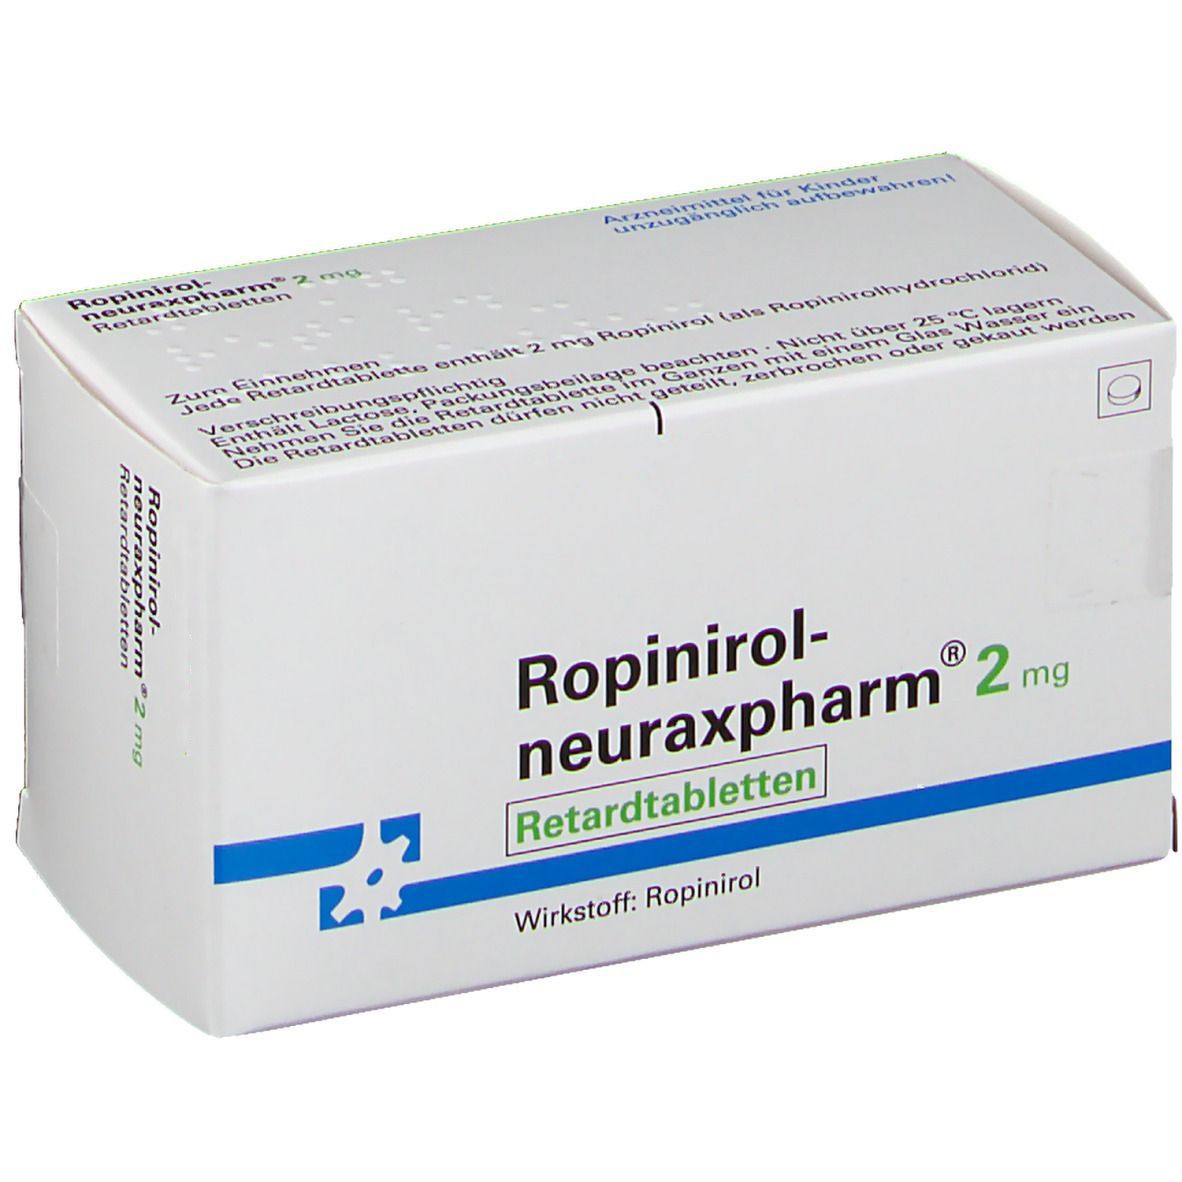 Ropinirol-neuraxpharm® 2 mg